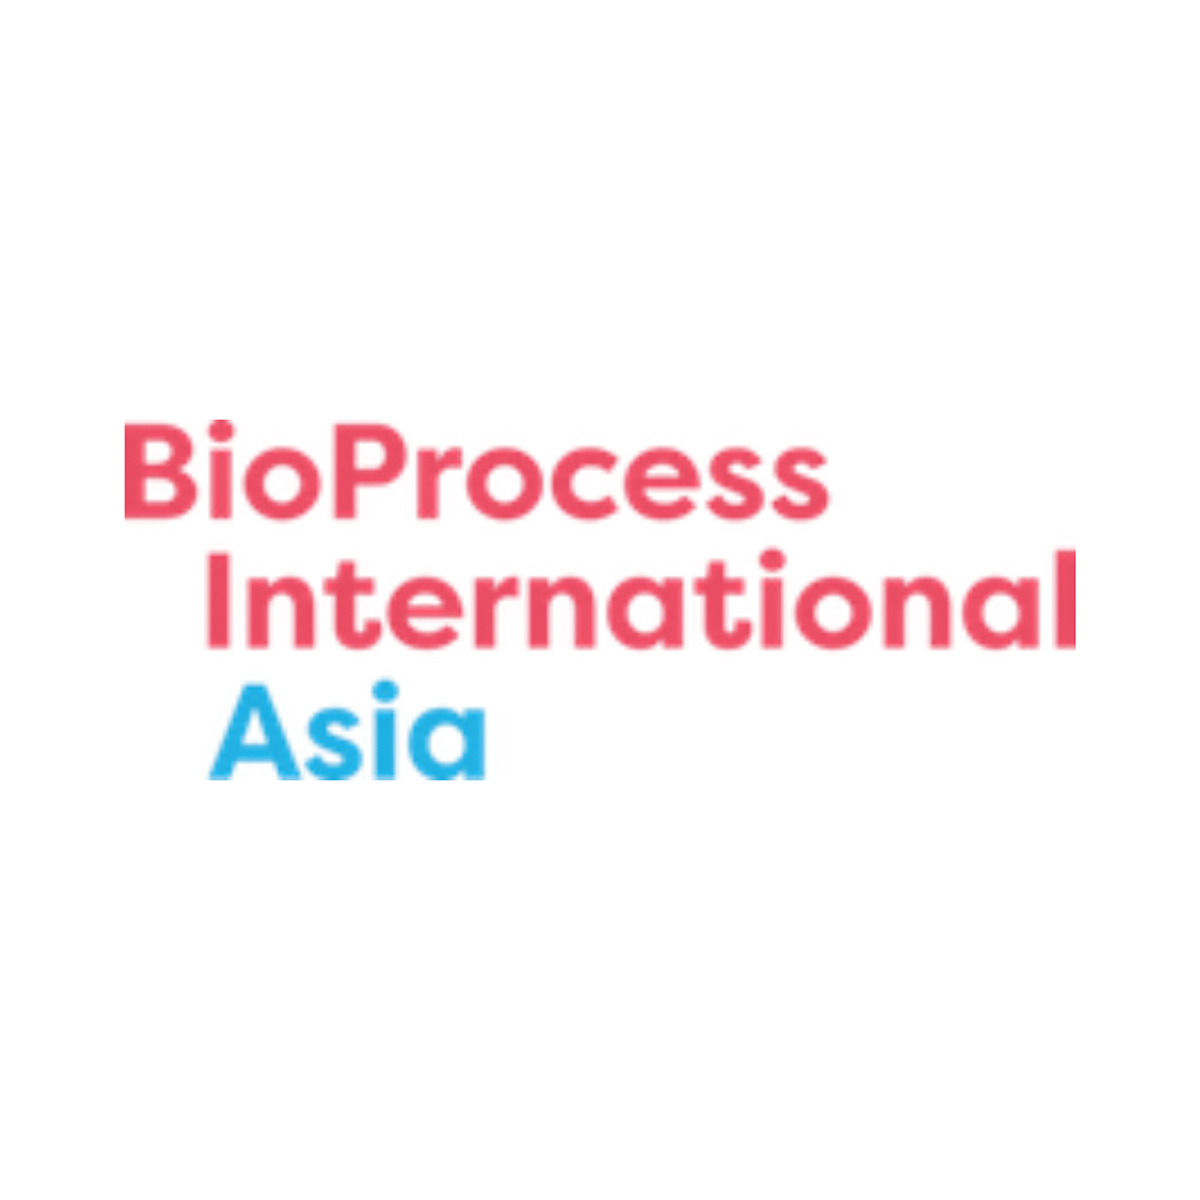 BioProcess International Asia 2019